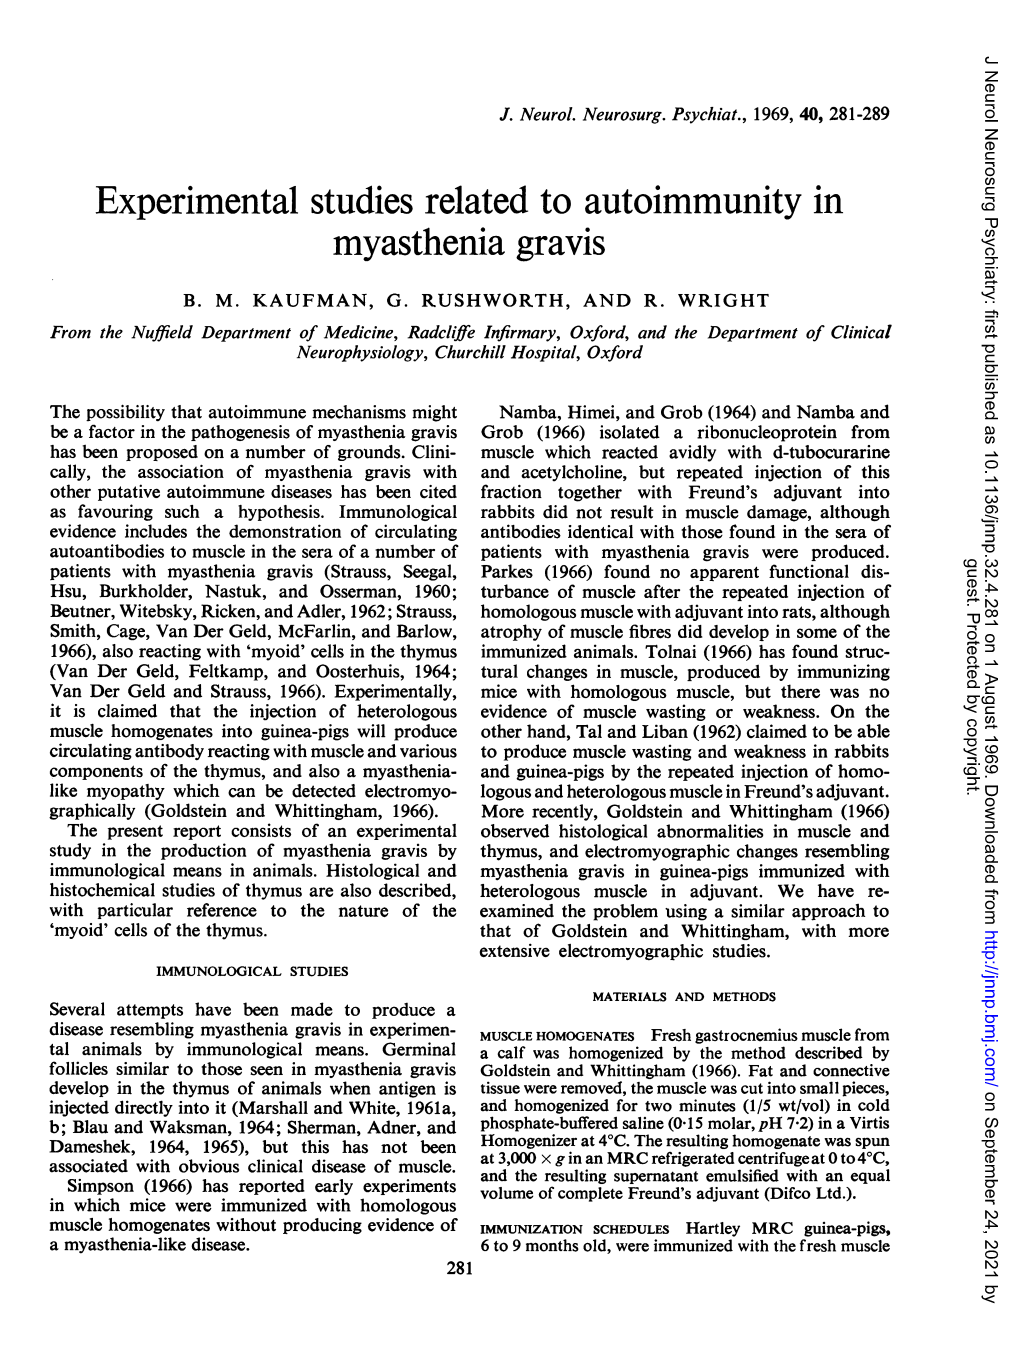 Experimental Studies Related to Autoimmunity in Myasthenia Gravis